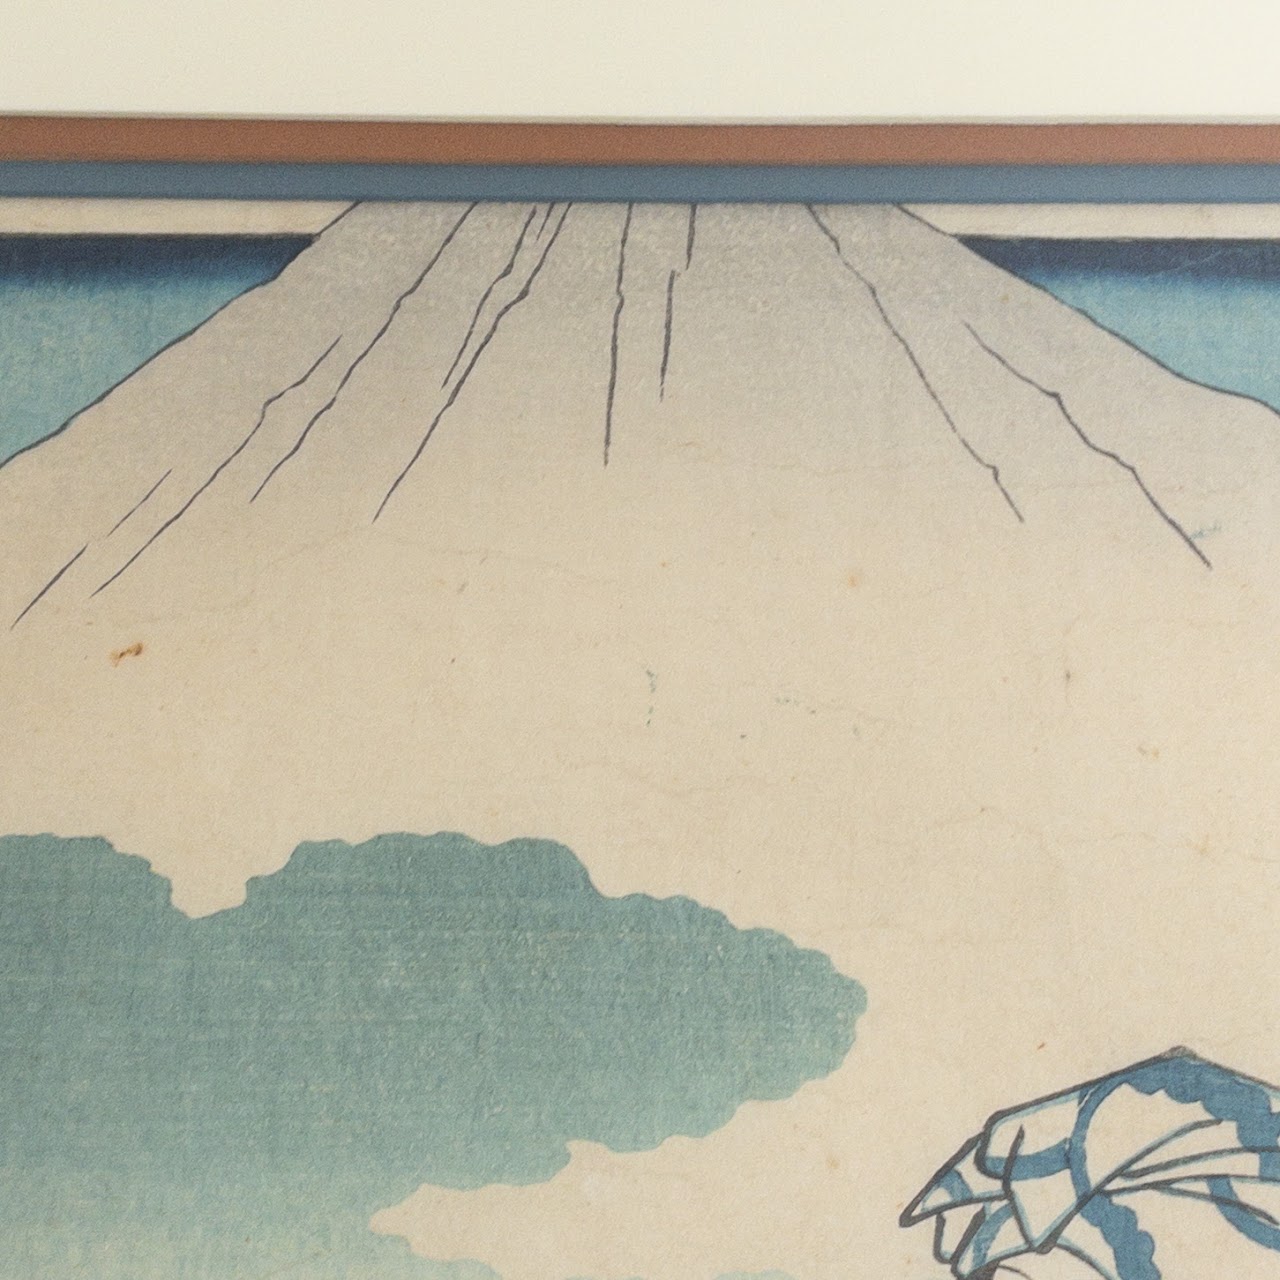 Japanese Antique Woodblock Print #2